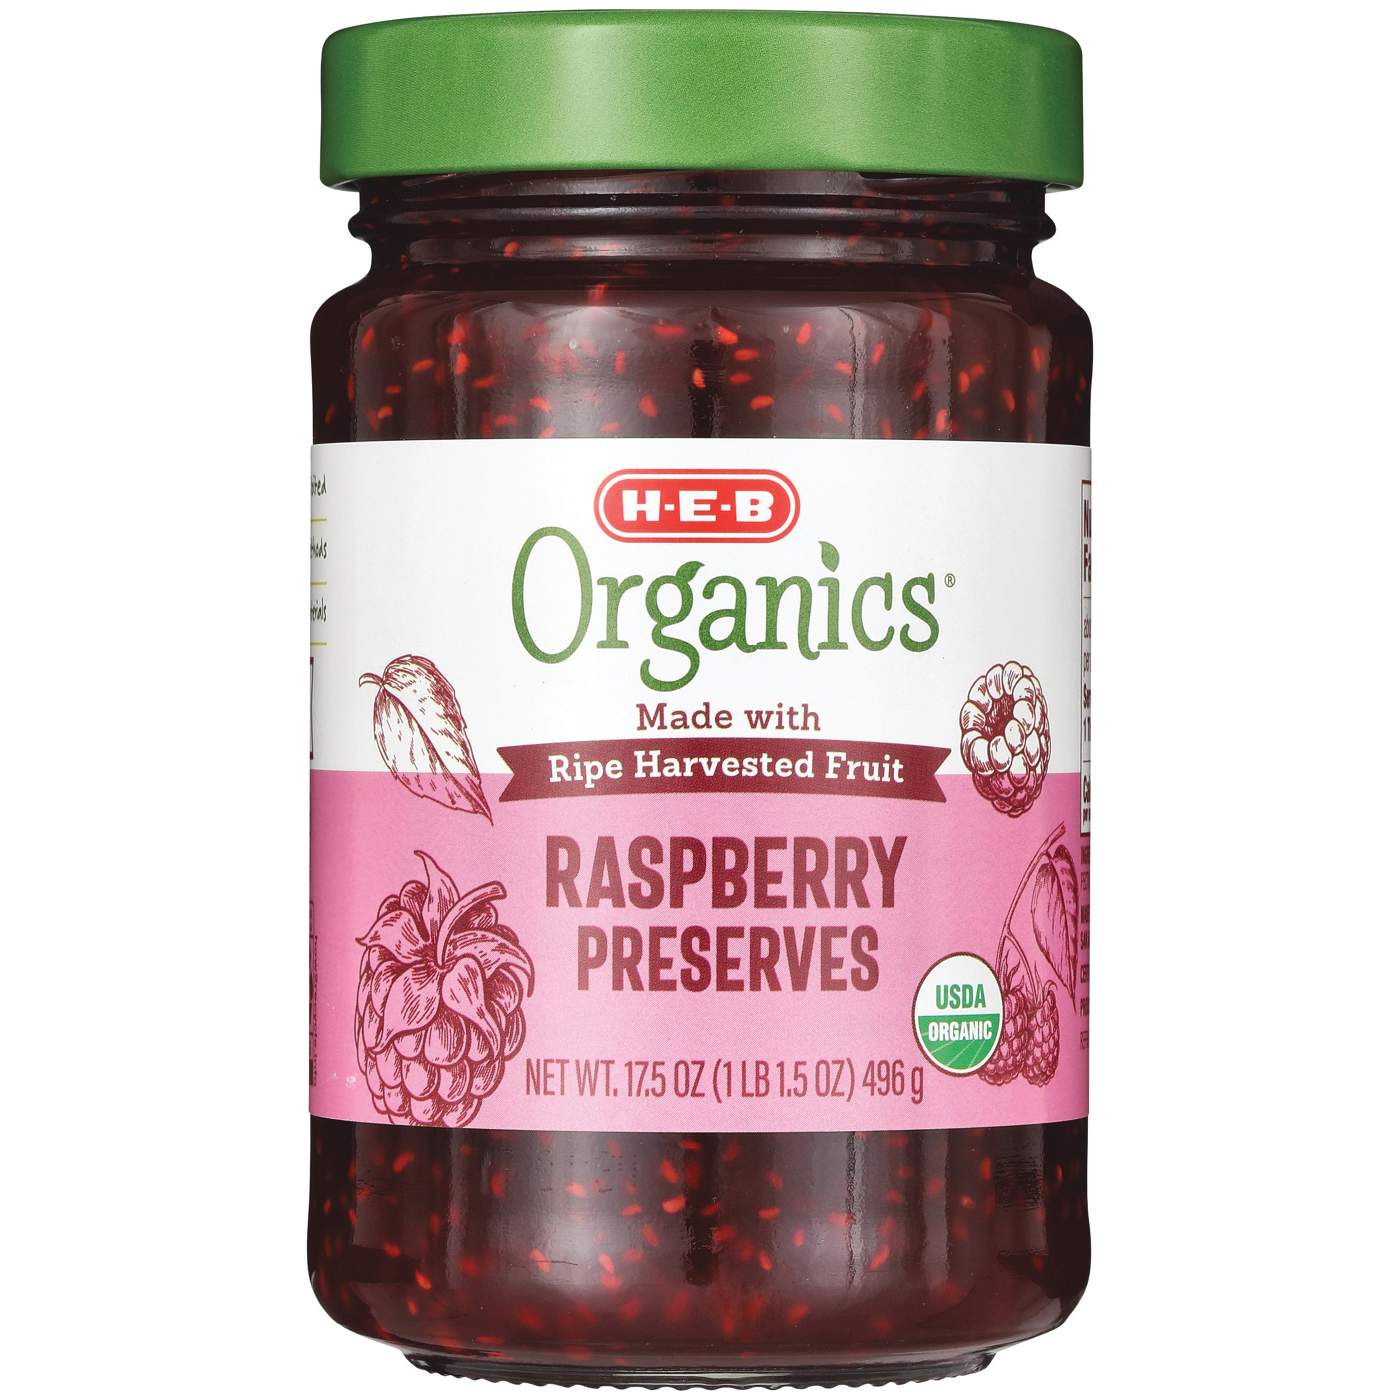 H-E-B Organics Raspberry Preserves; image 1 of 2